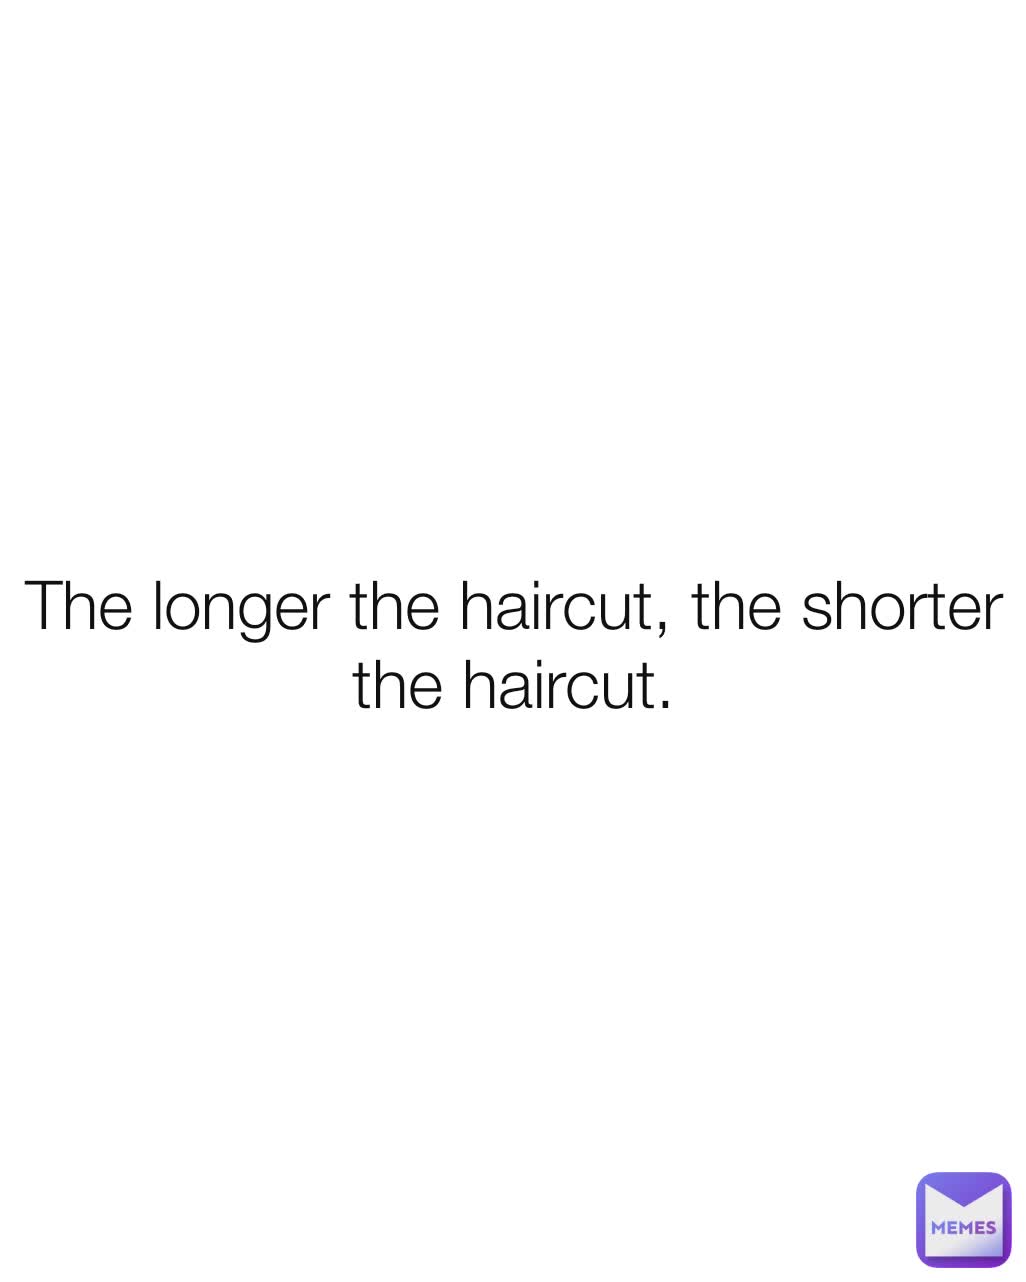 The longer the haircut, the shorter the haircut.